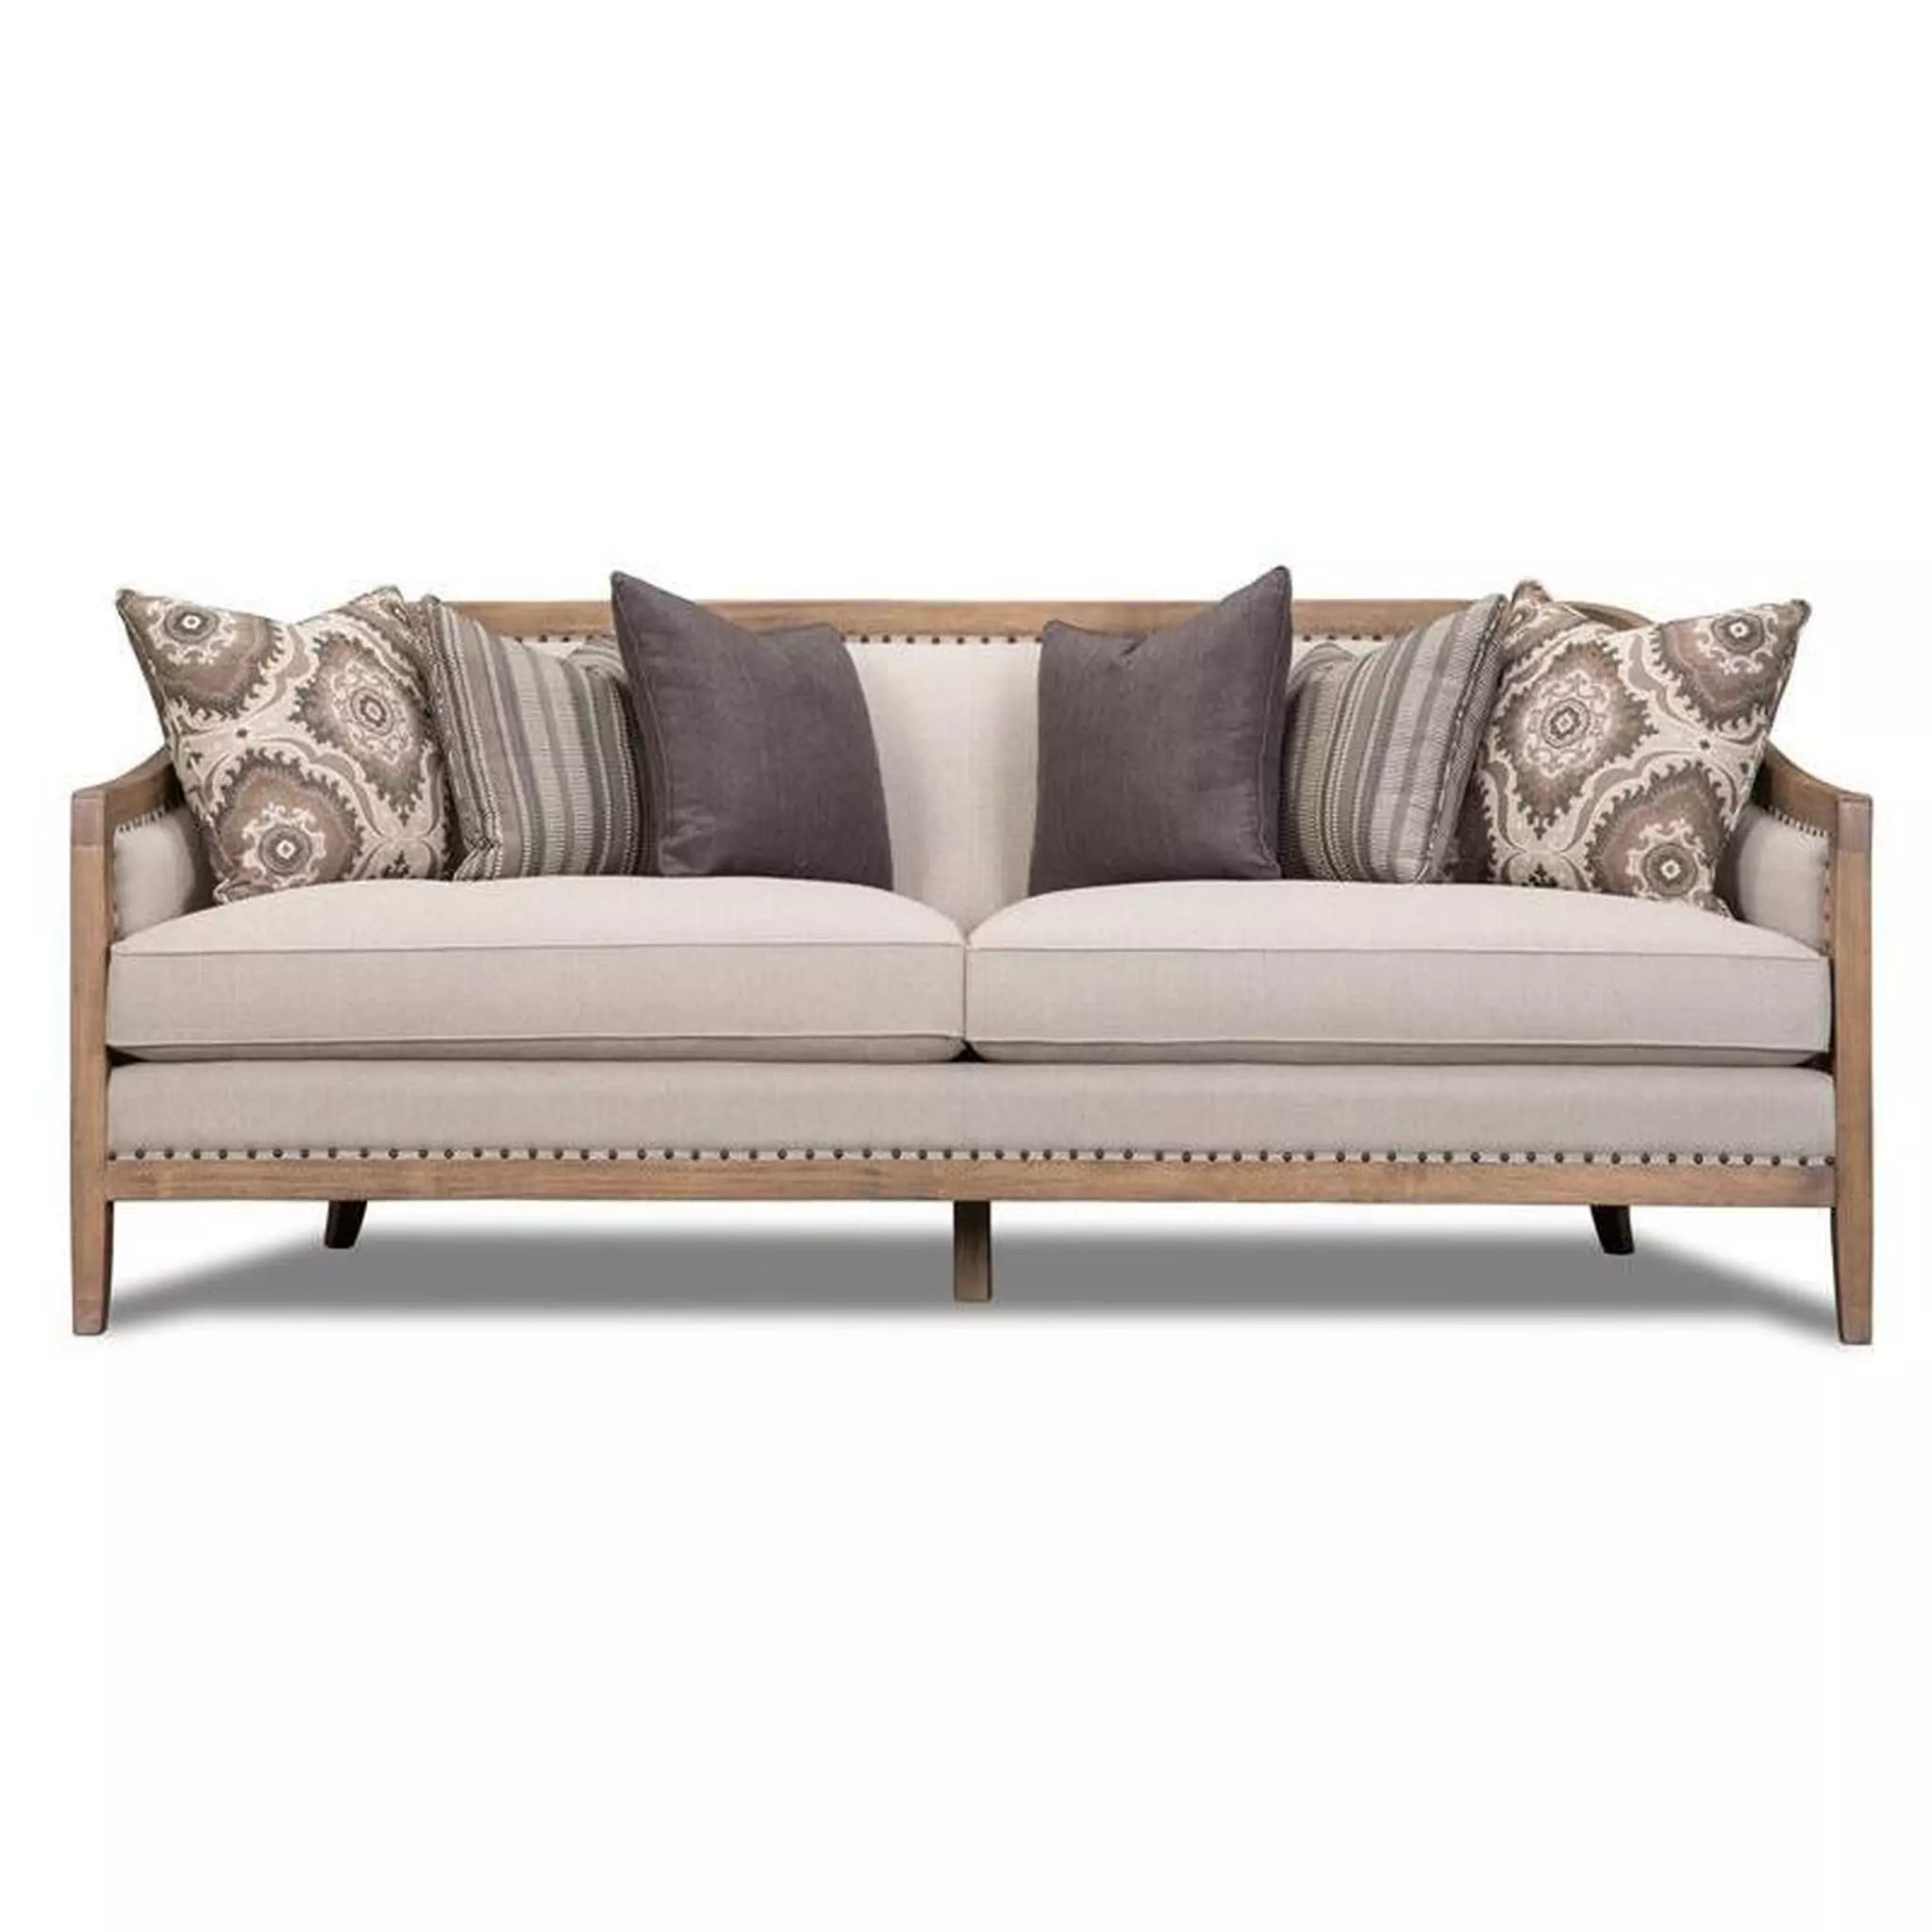 Colburn Stationary Fabric Sofa Set